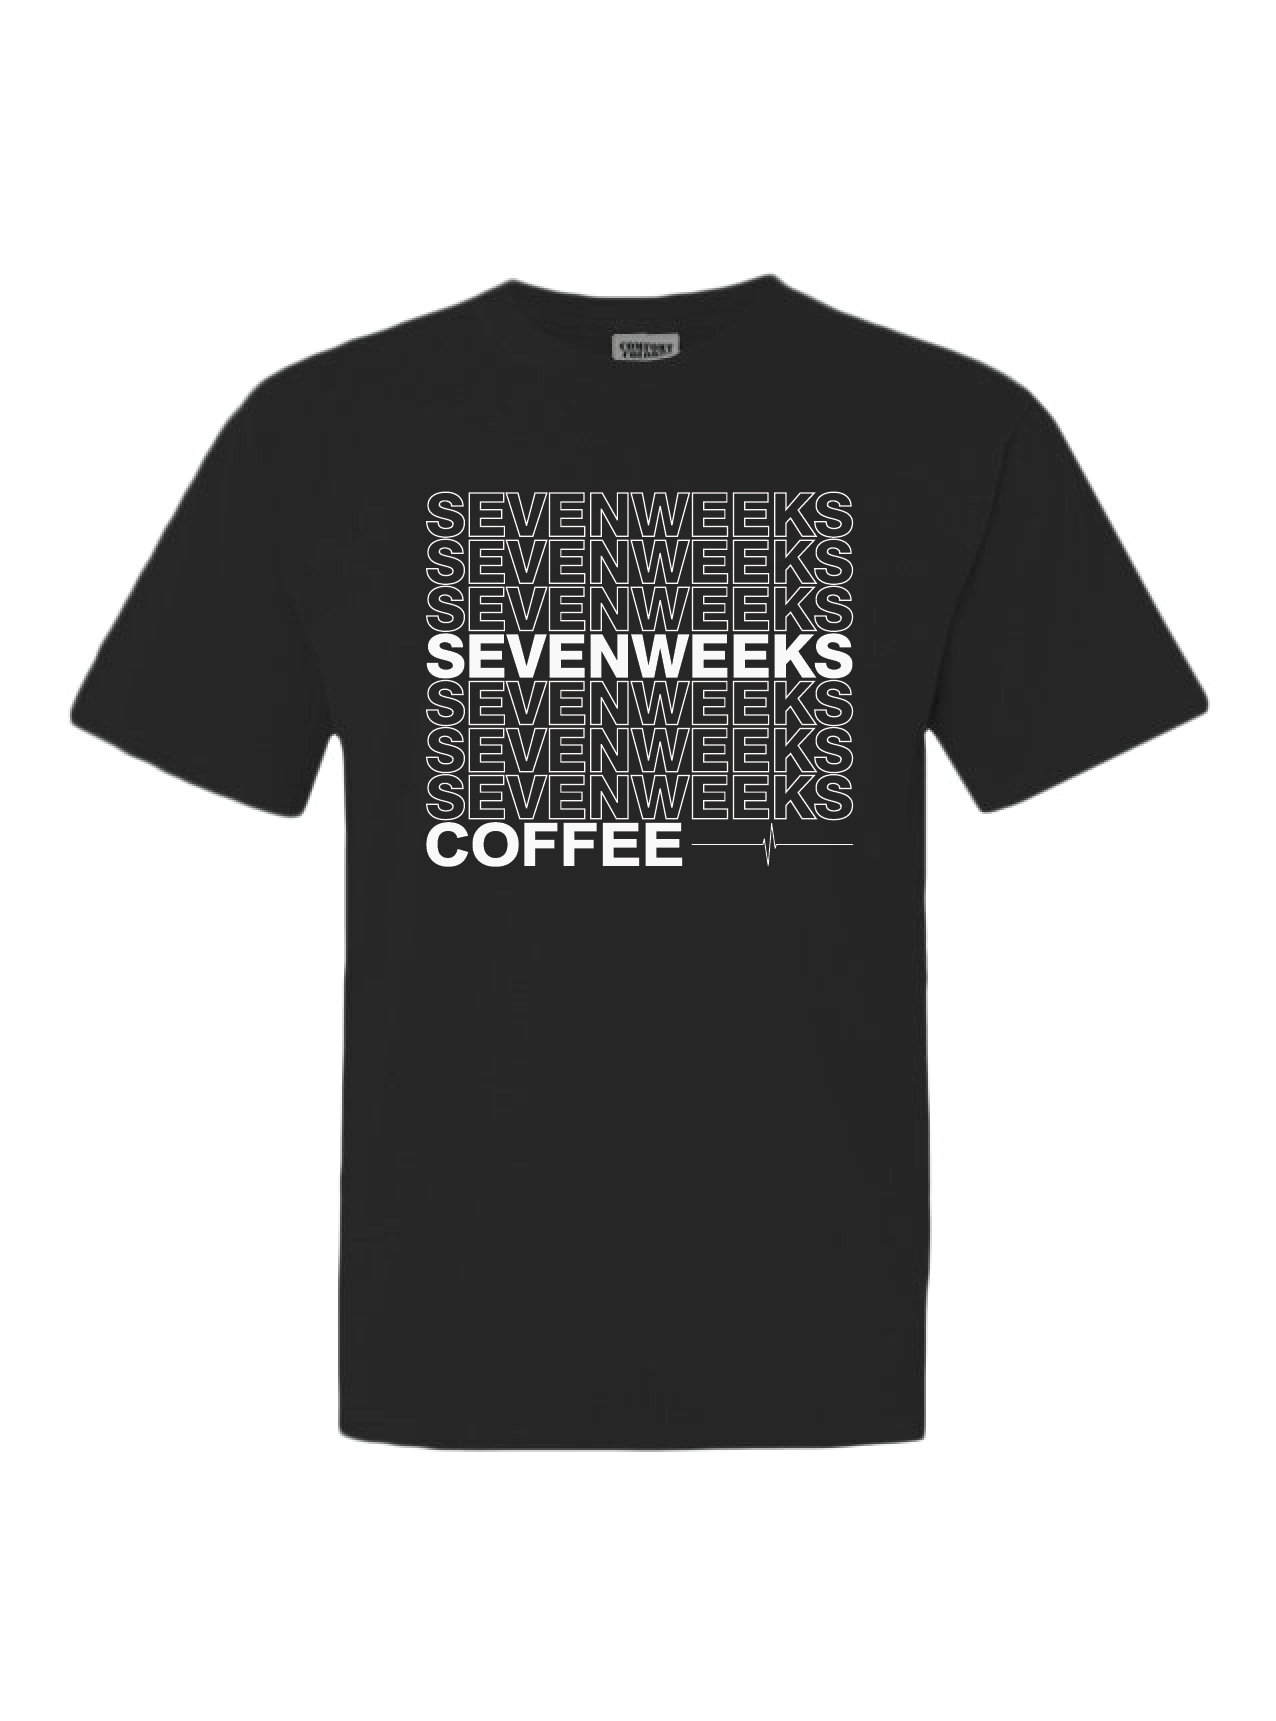 Stacked Seven Weeks - Black